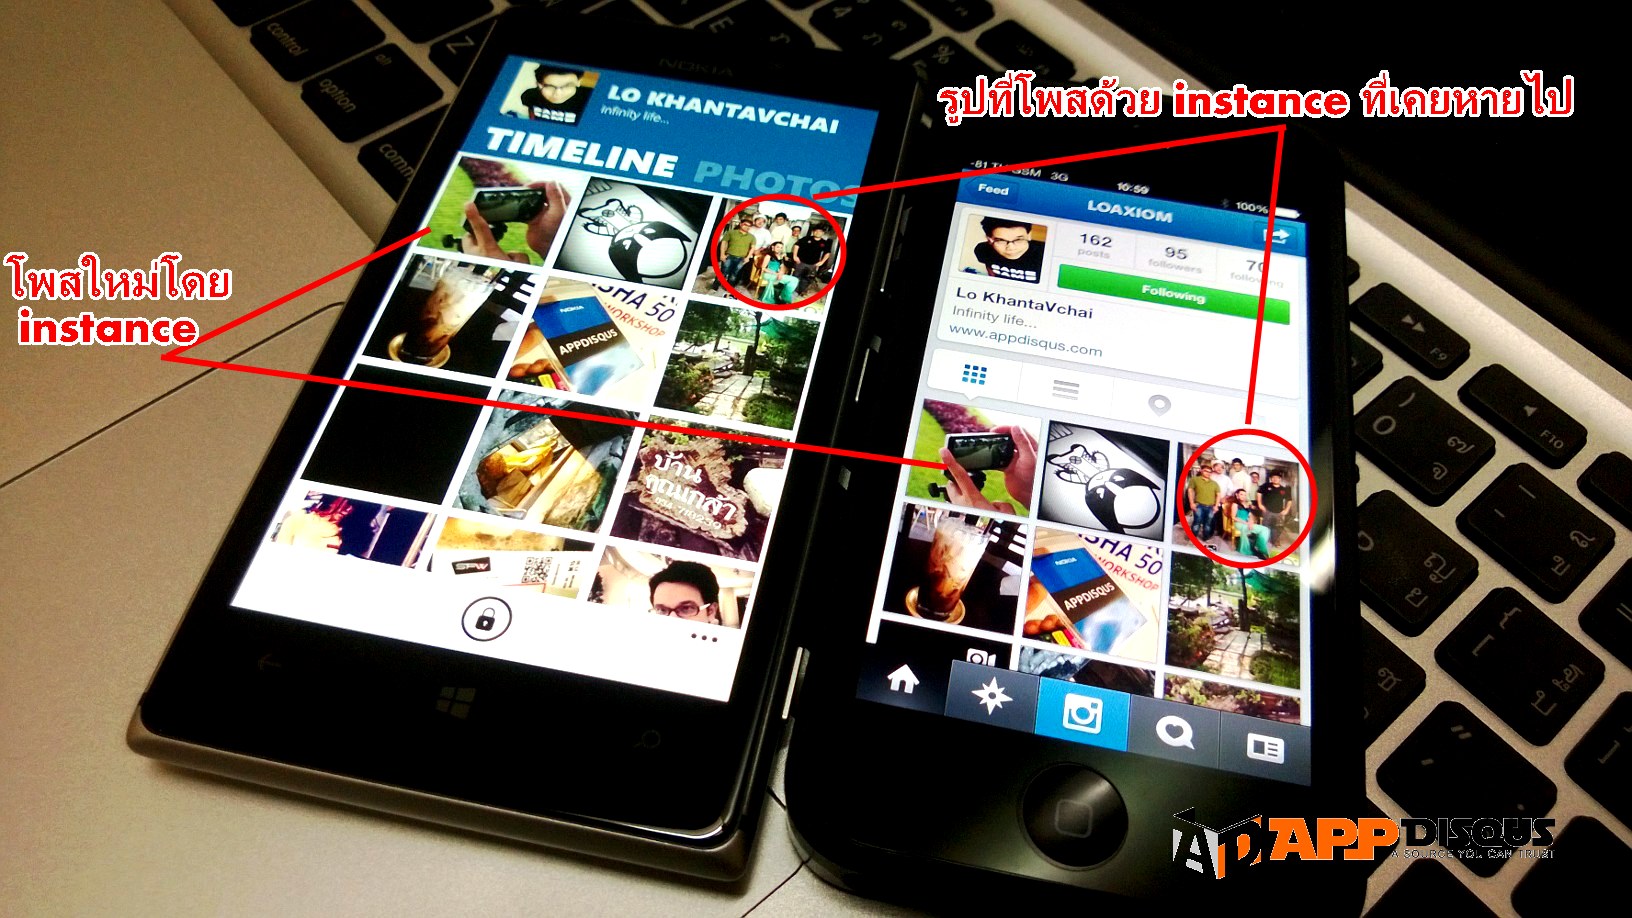 WP 20130801 0051 | instagram | <!--:TH-->AppdisQus ยืนยัน!! แอพพลิเคชั่น instance แอพเล่น instagram สำหรับ Windows Phone 8 กลับมาใช้งานได้ตามปกติแล้ว<!--:-->